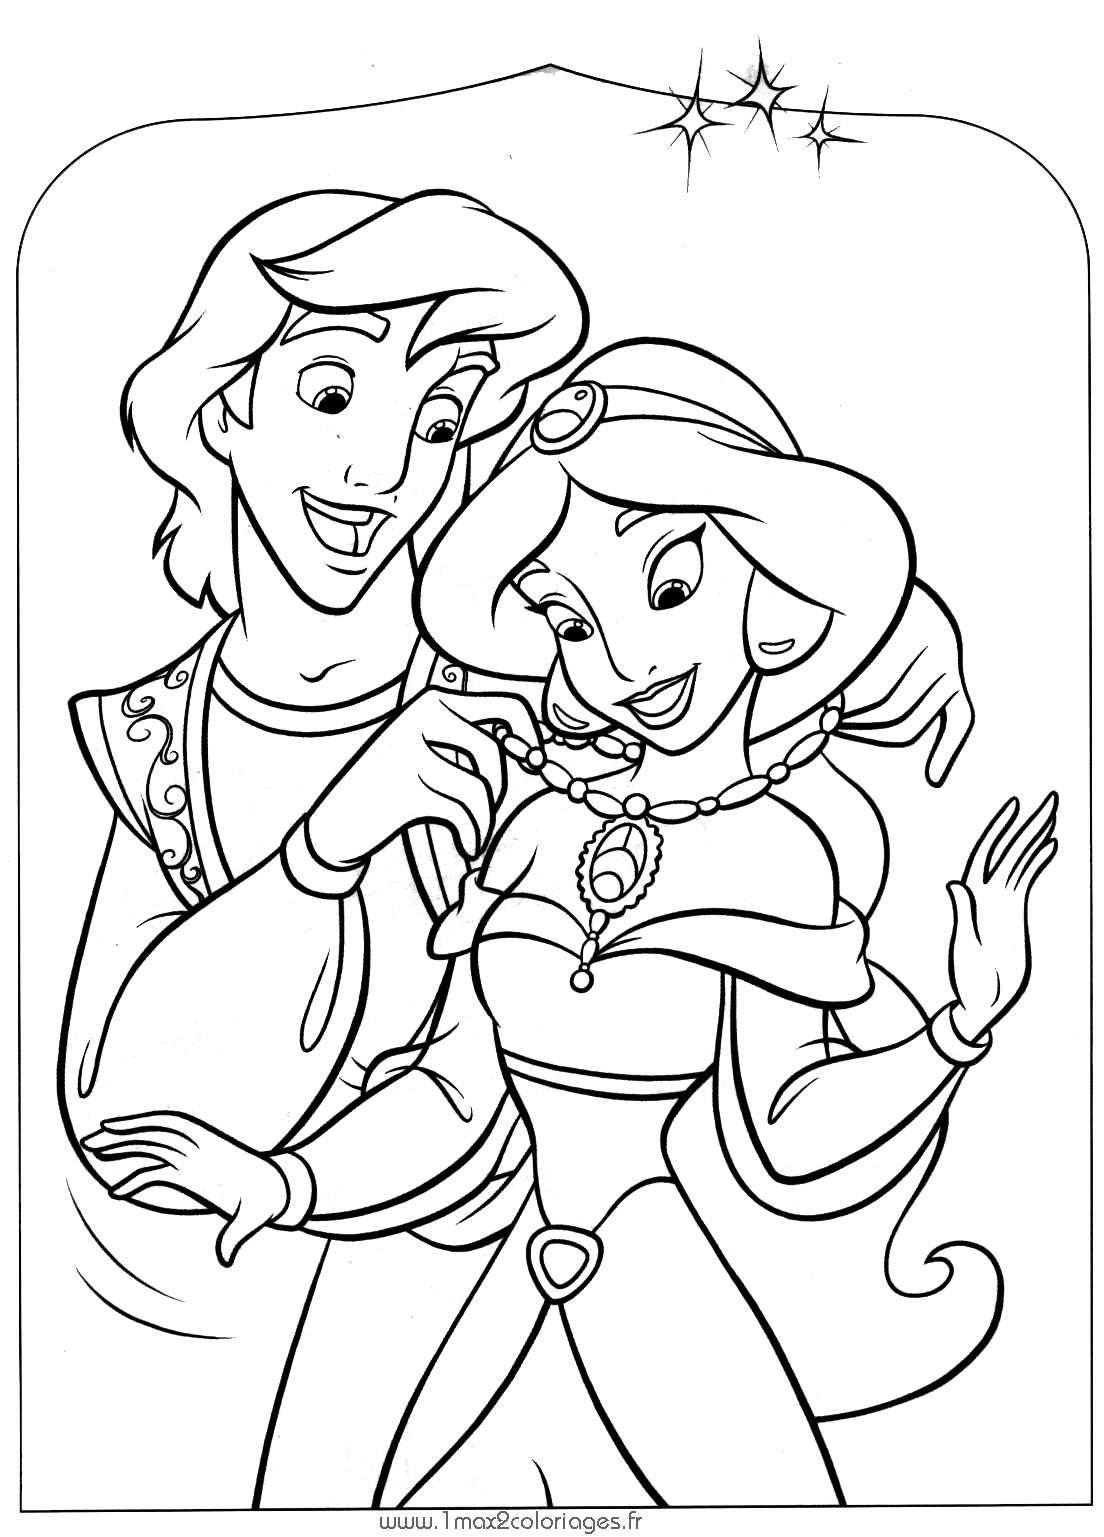 Página para colorir simples de Aladino e Jasmine